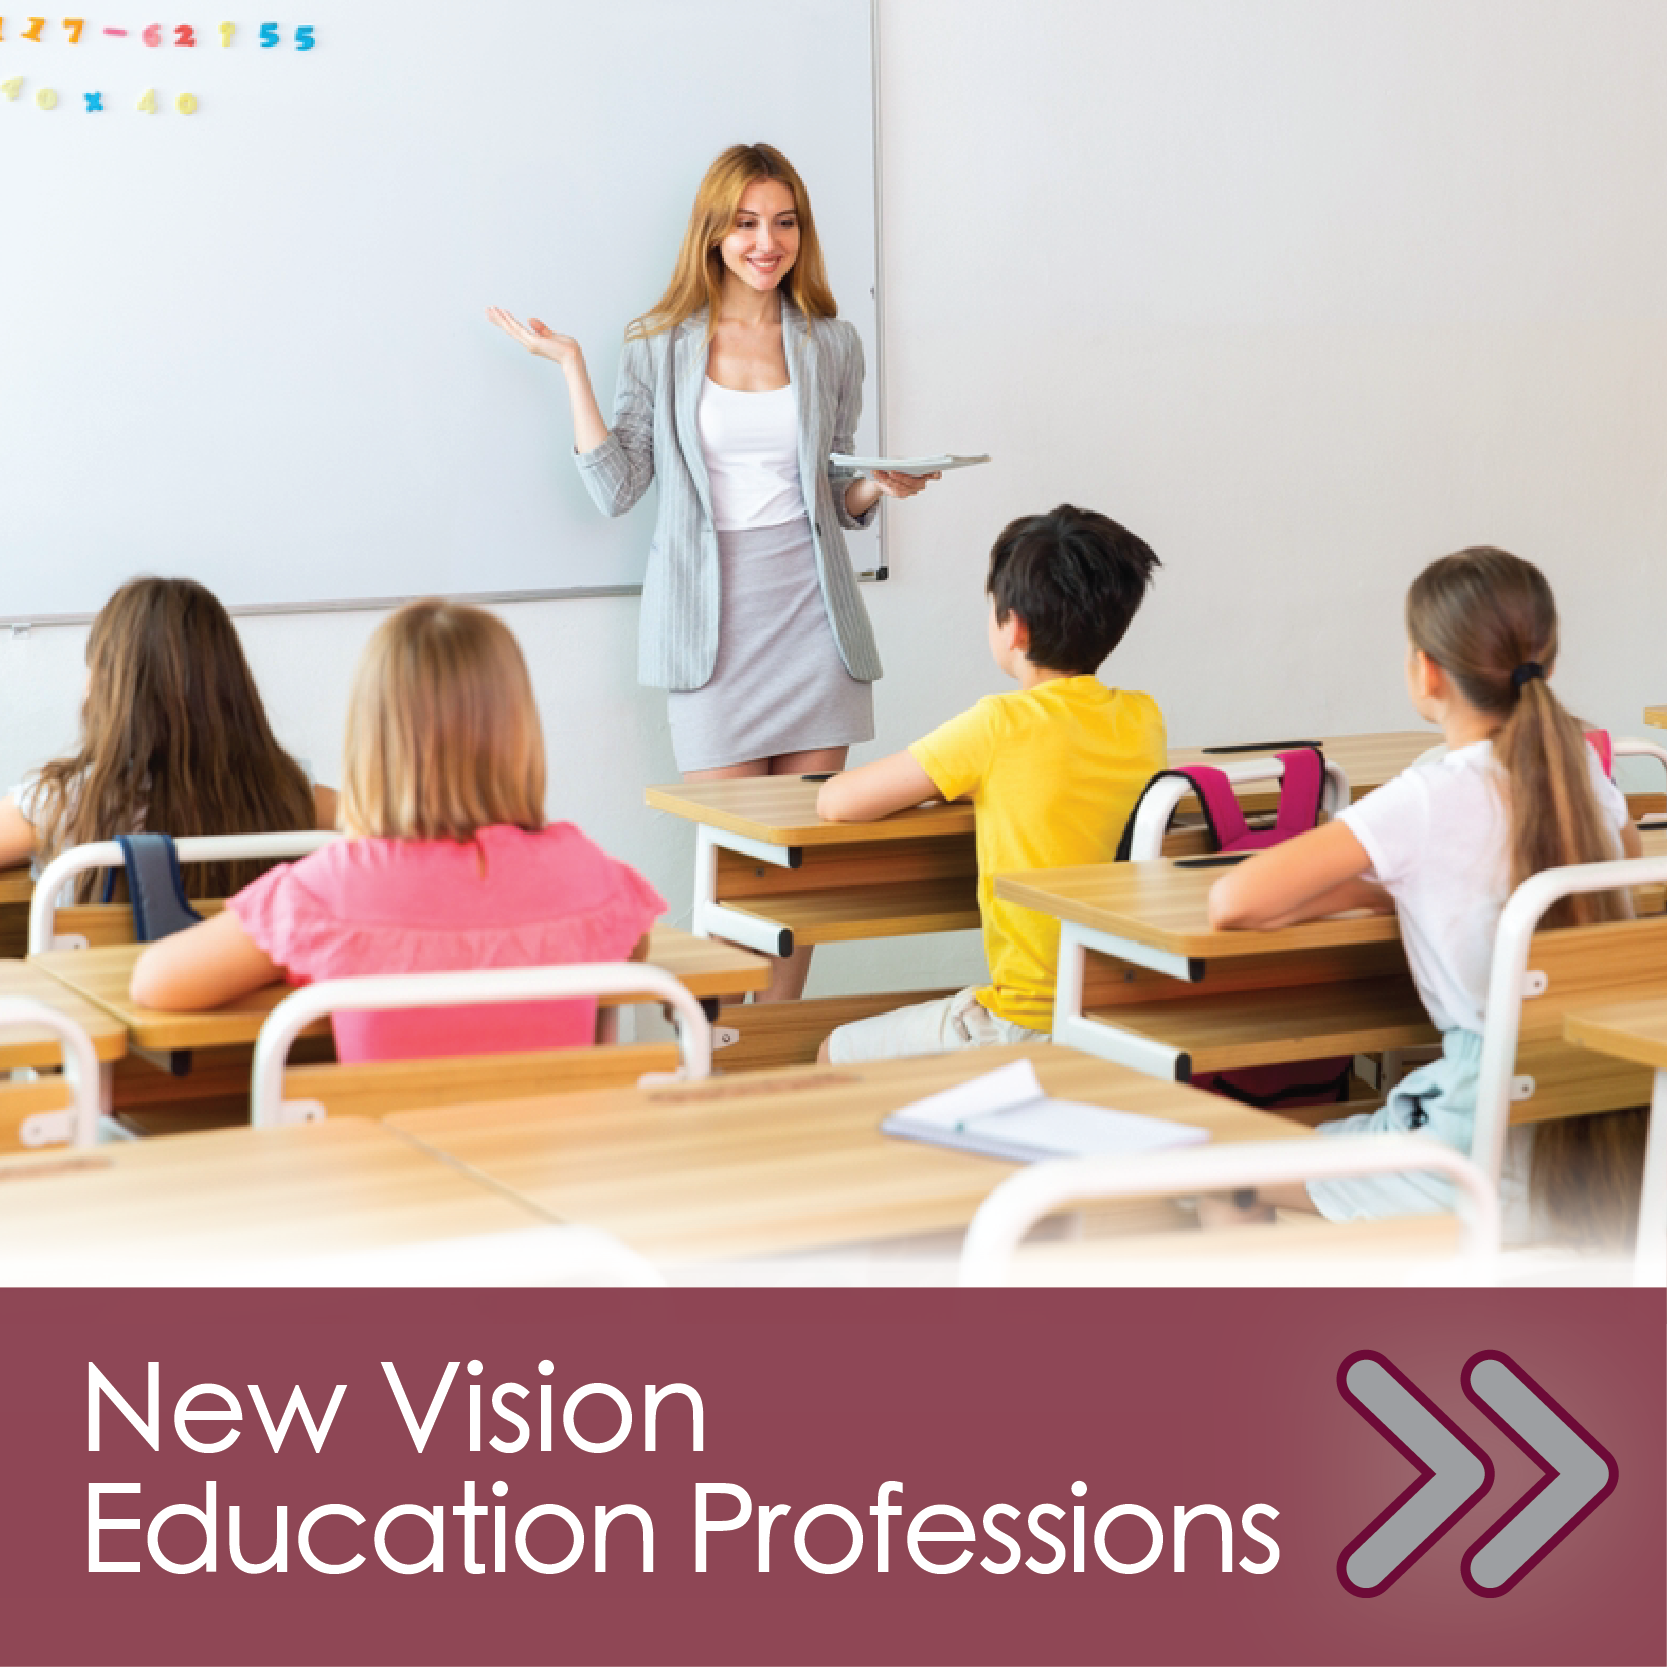 DCMO BOCES New Vision Education Professions Program